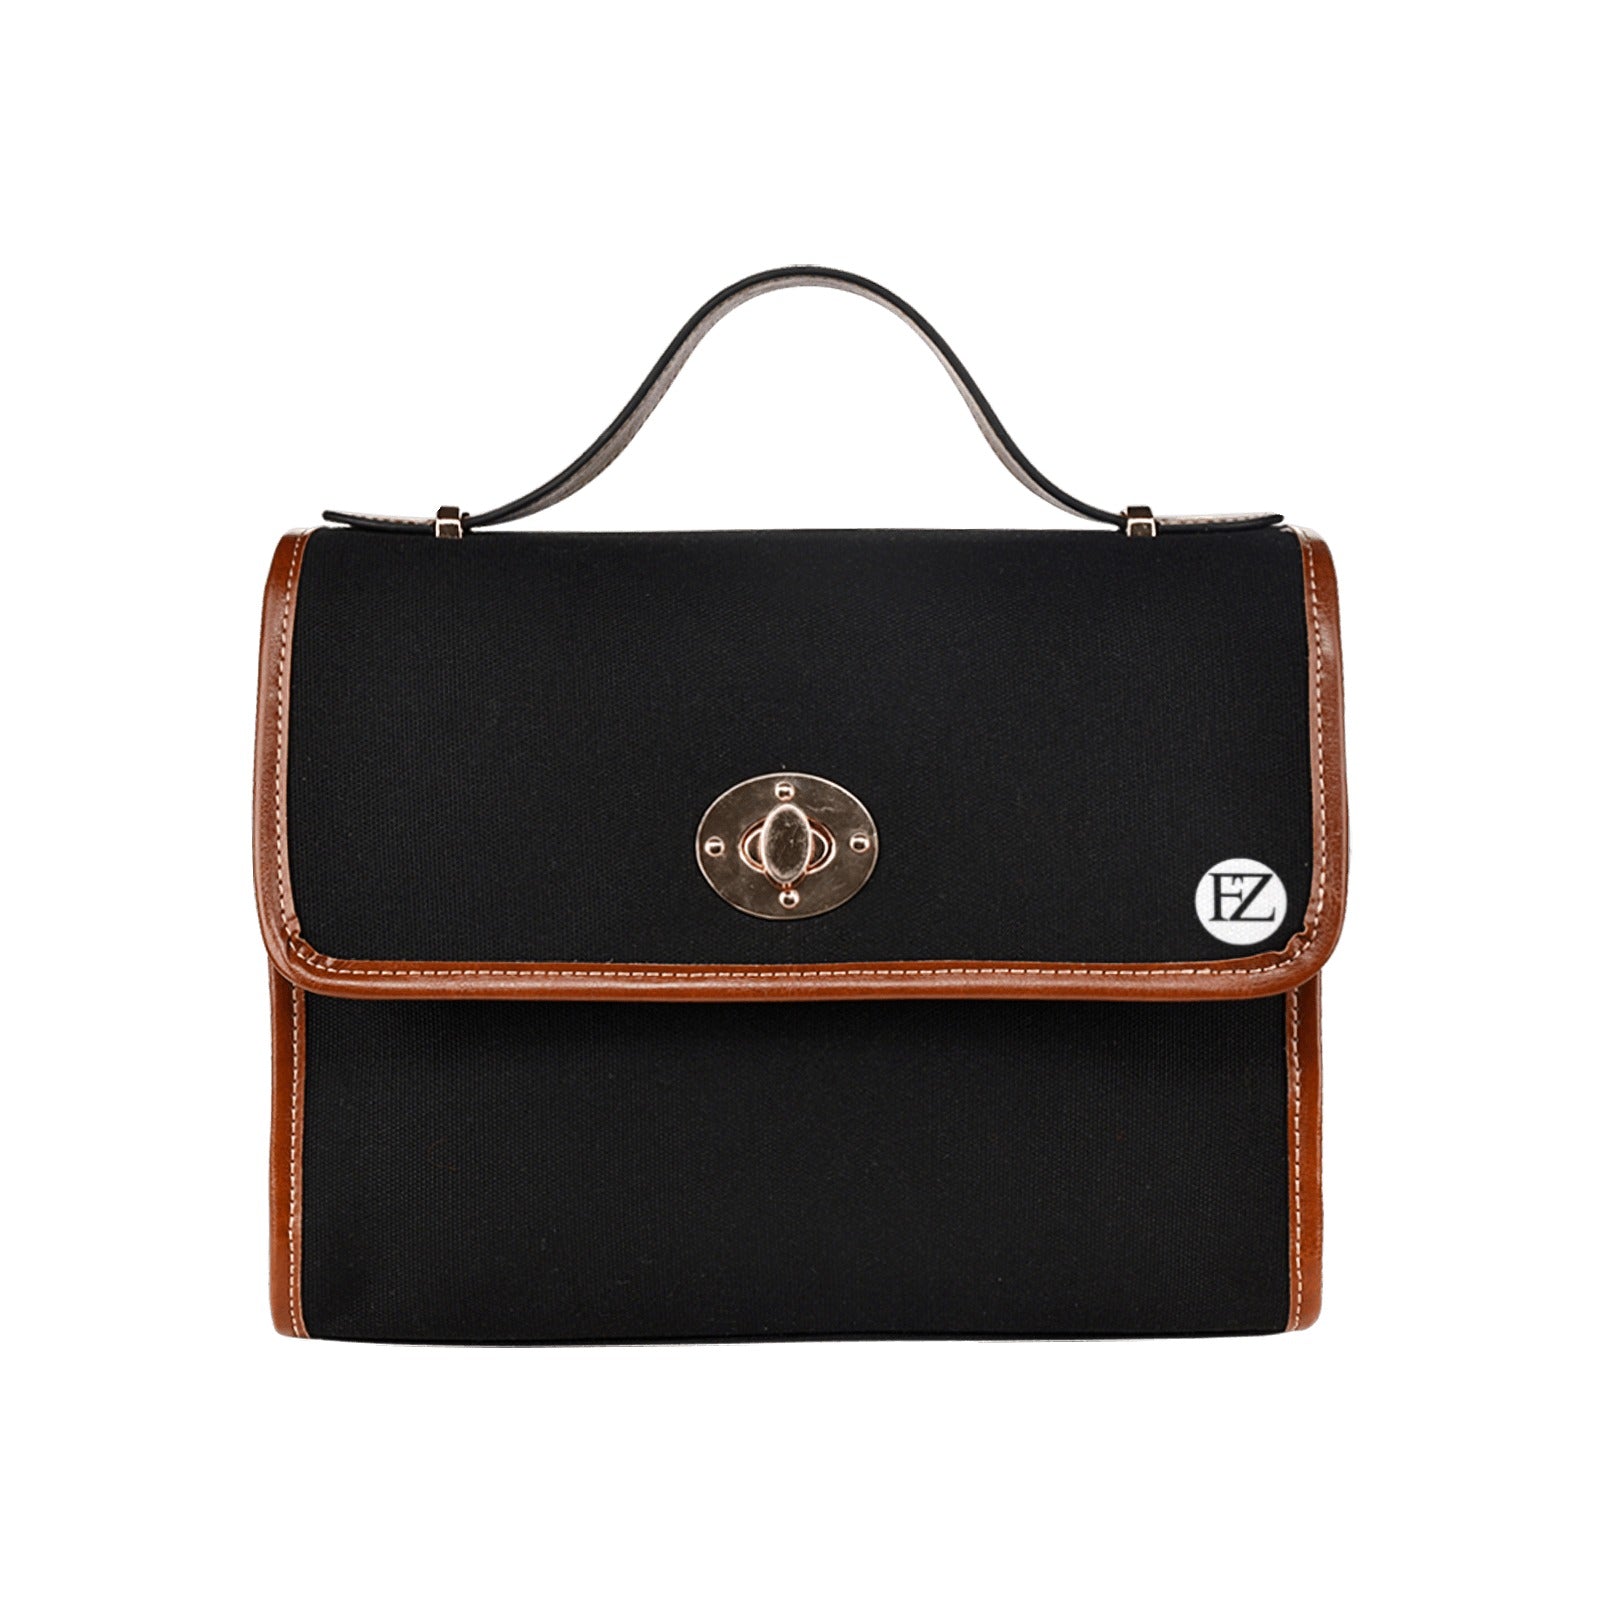 fz original handbag one size / fz - black all over print waterproof canvas bag(model1641)(brown strap)